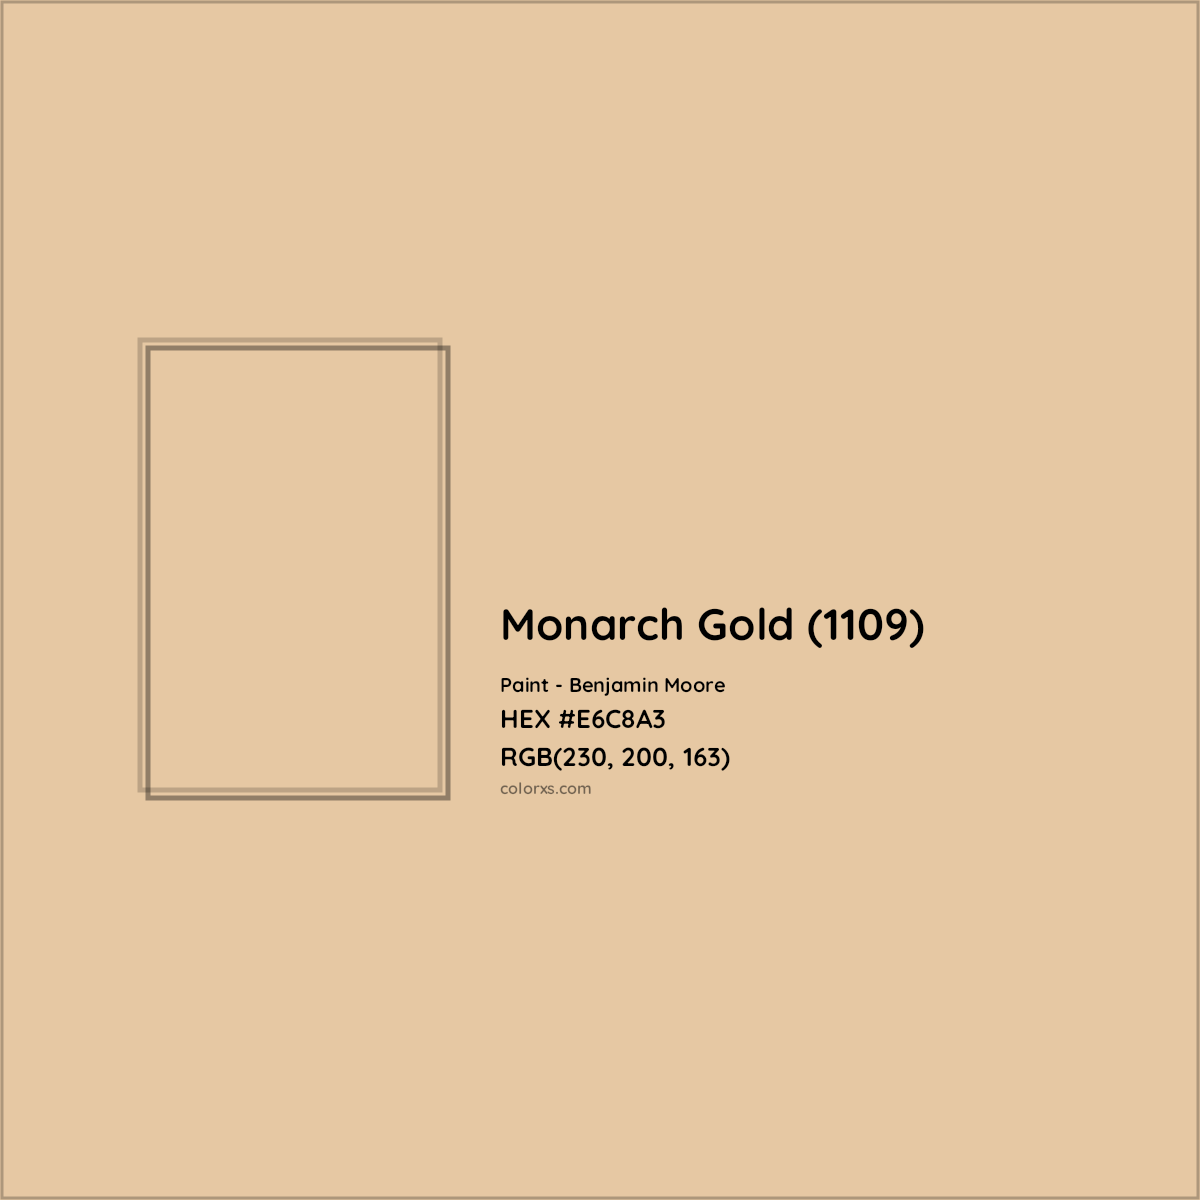 HEX #E6C8A3 Monarch Gold (1109) Paint Benjamin Moore - Color Code